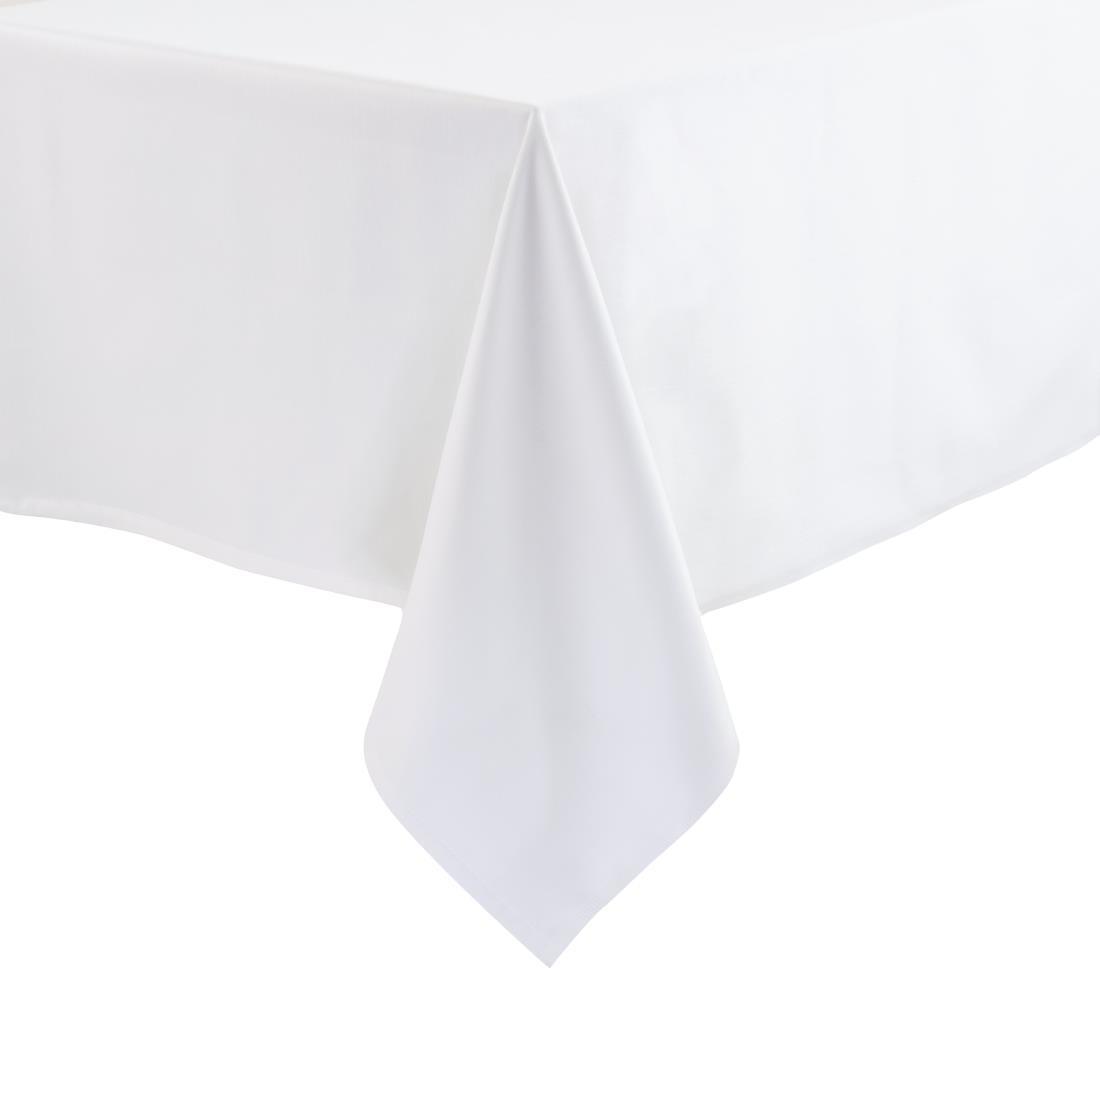 Mitre Essentials Occasions Tablecloth White 1780 x 3650mm - GW436  - 1